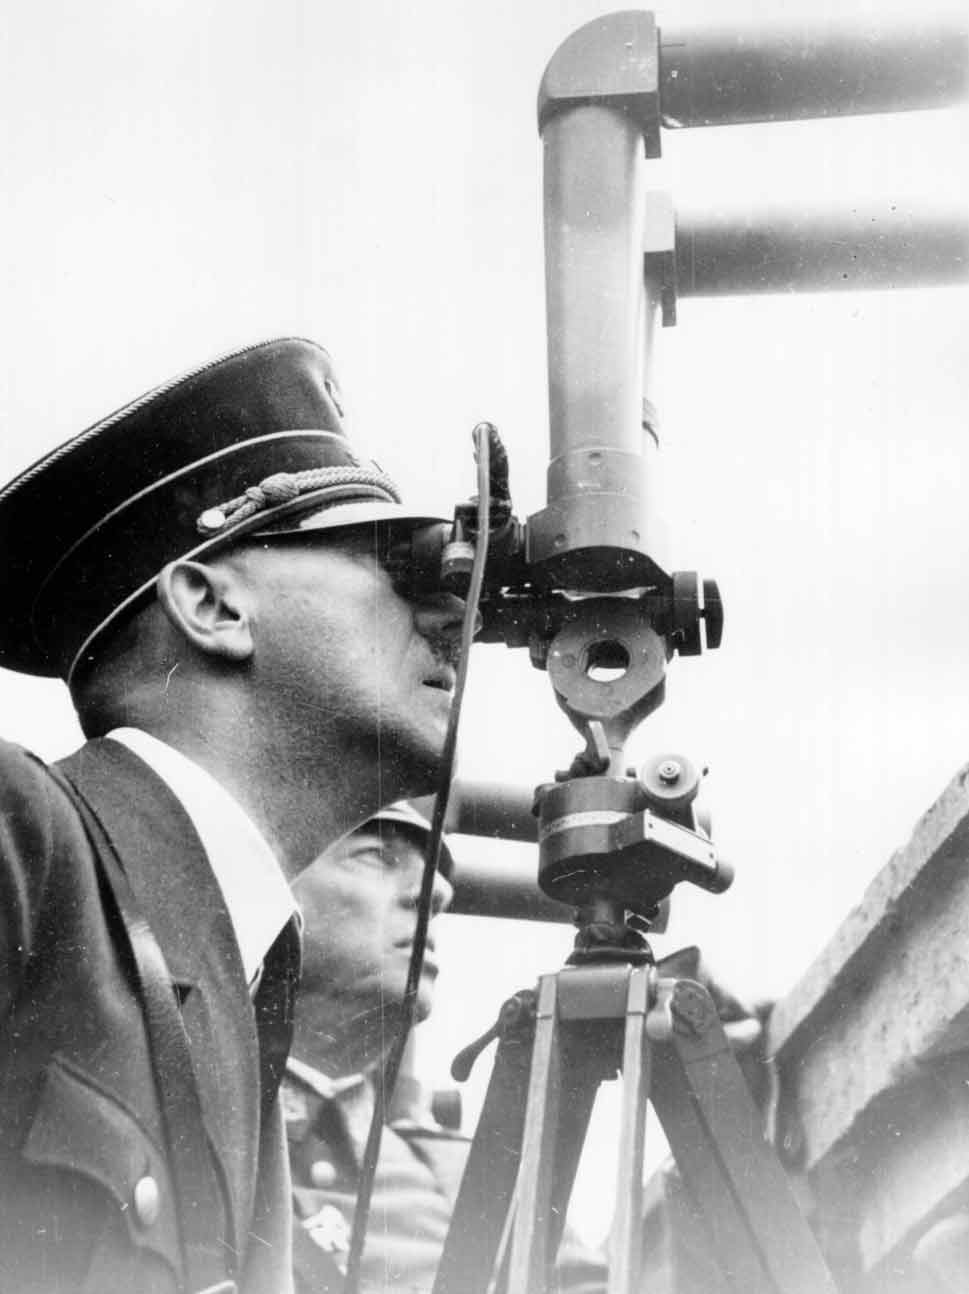 Hitler looking through a periscope